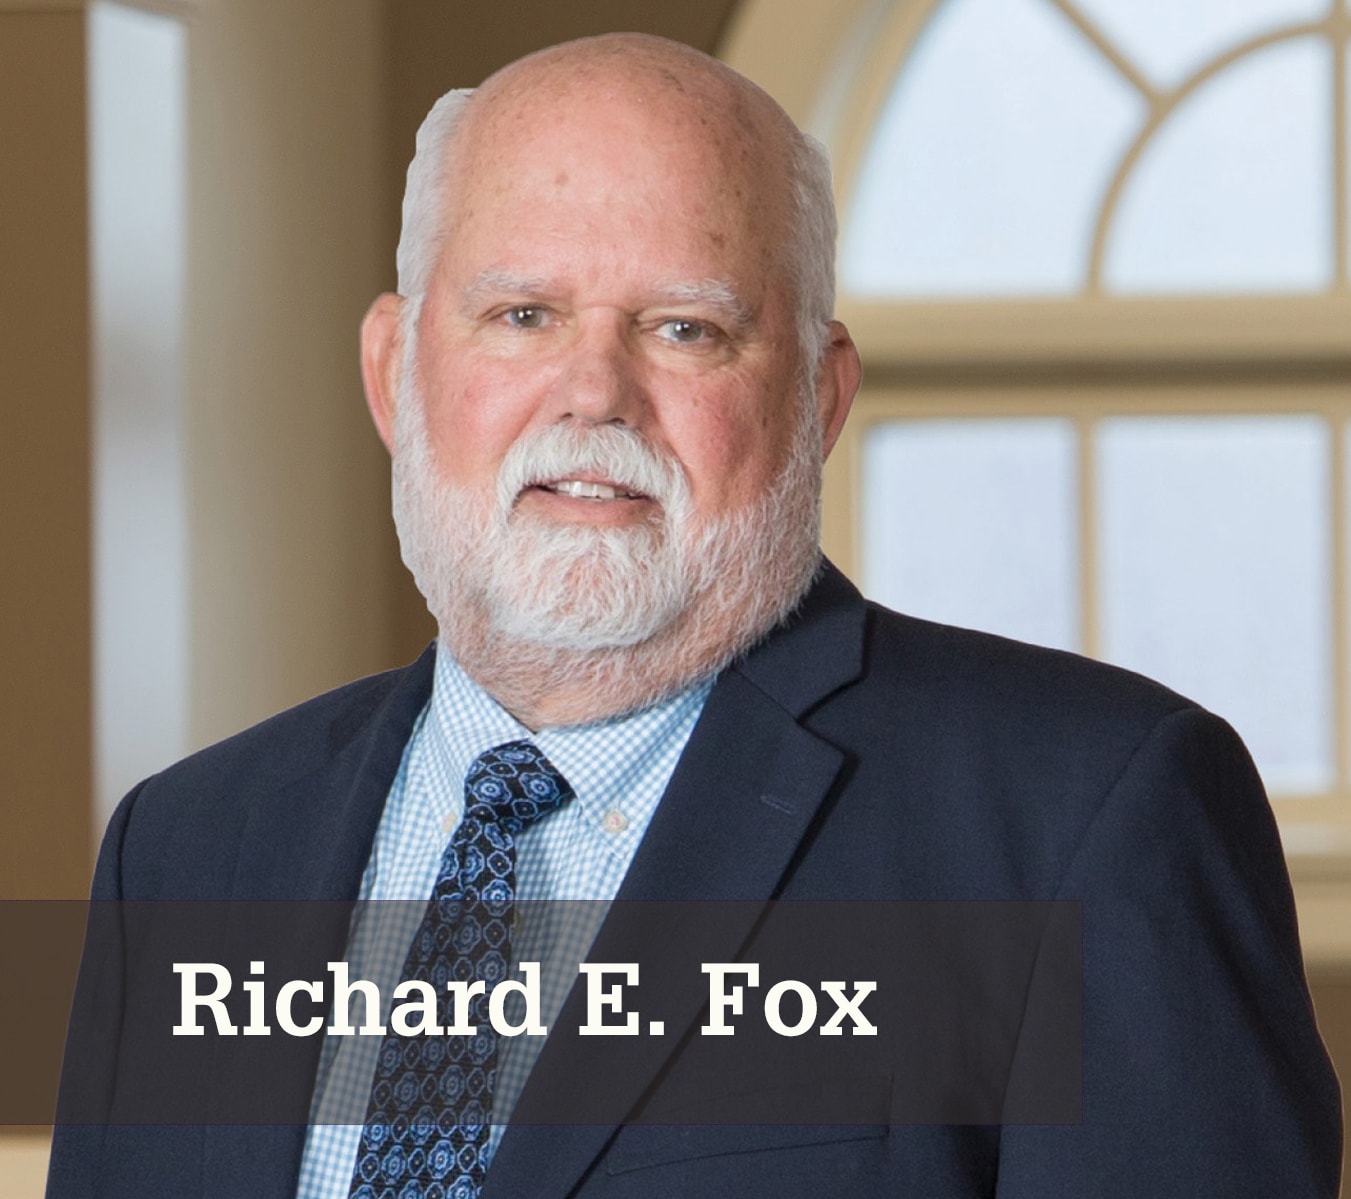 Richard E. Fox